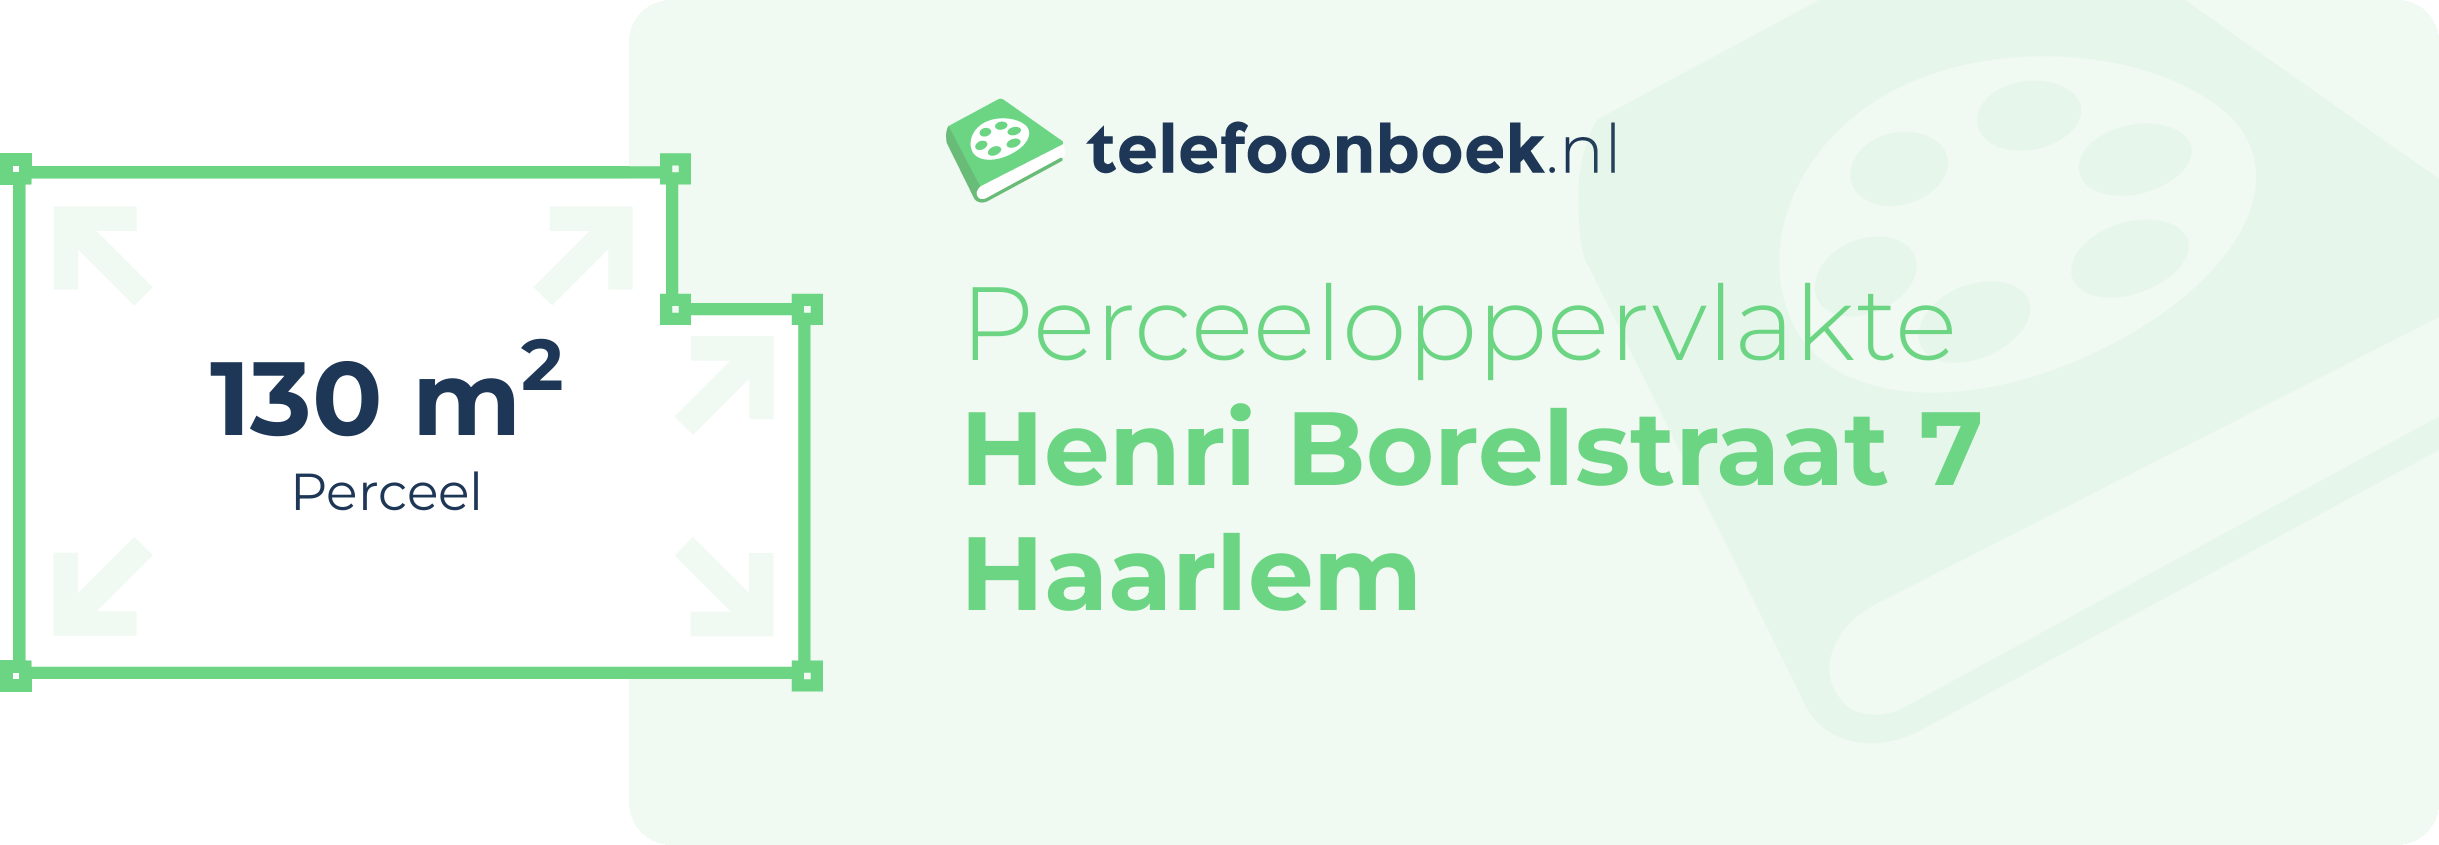 Perceeloppervlakte Henri Borelstraat 7 Haarlem